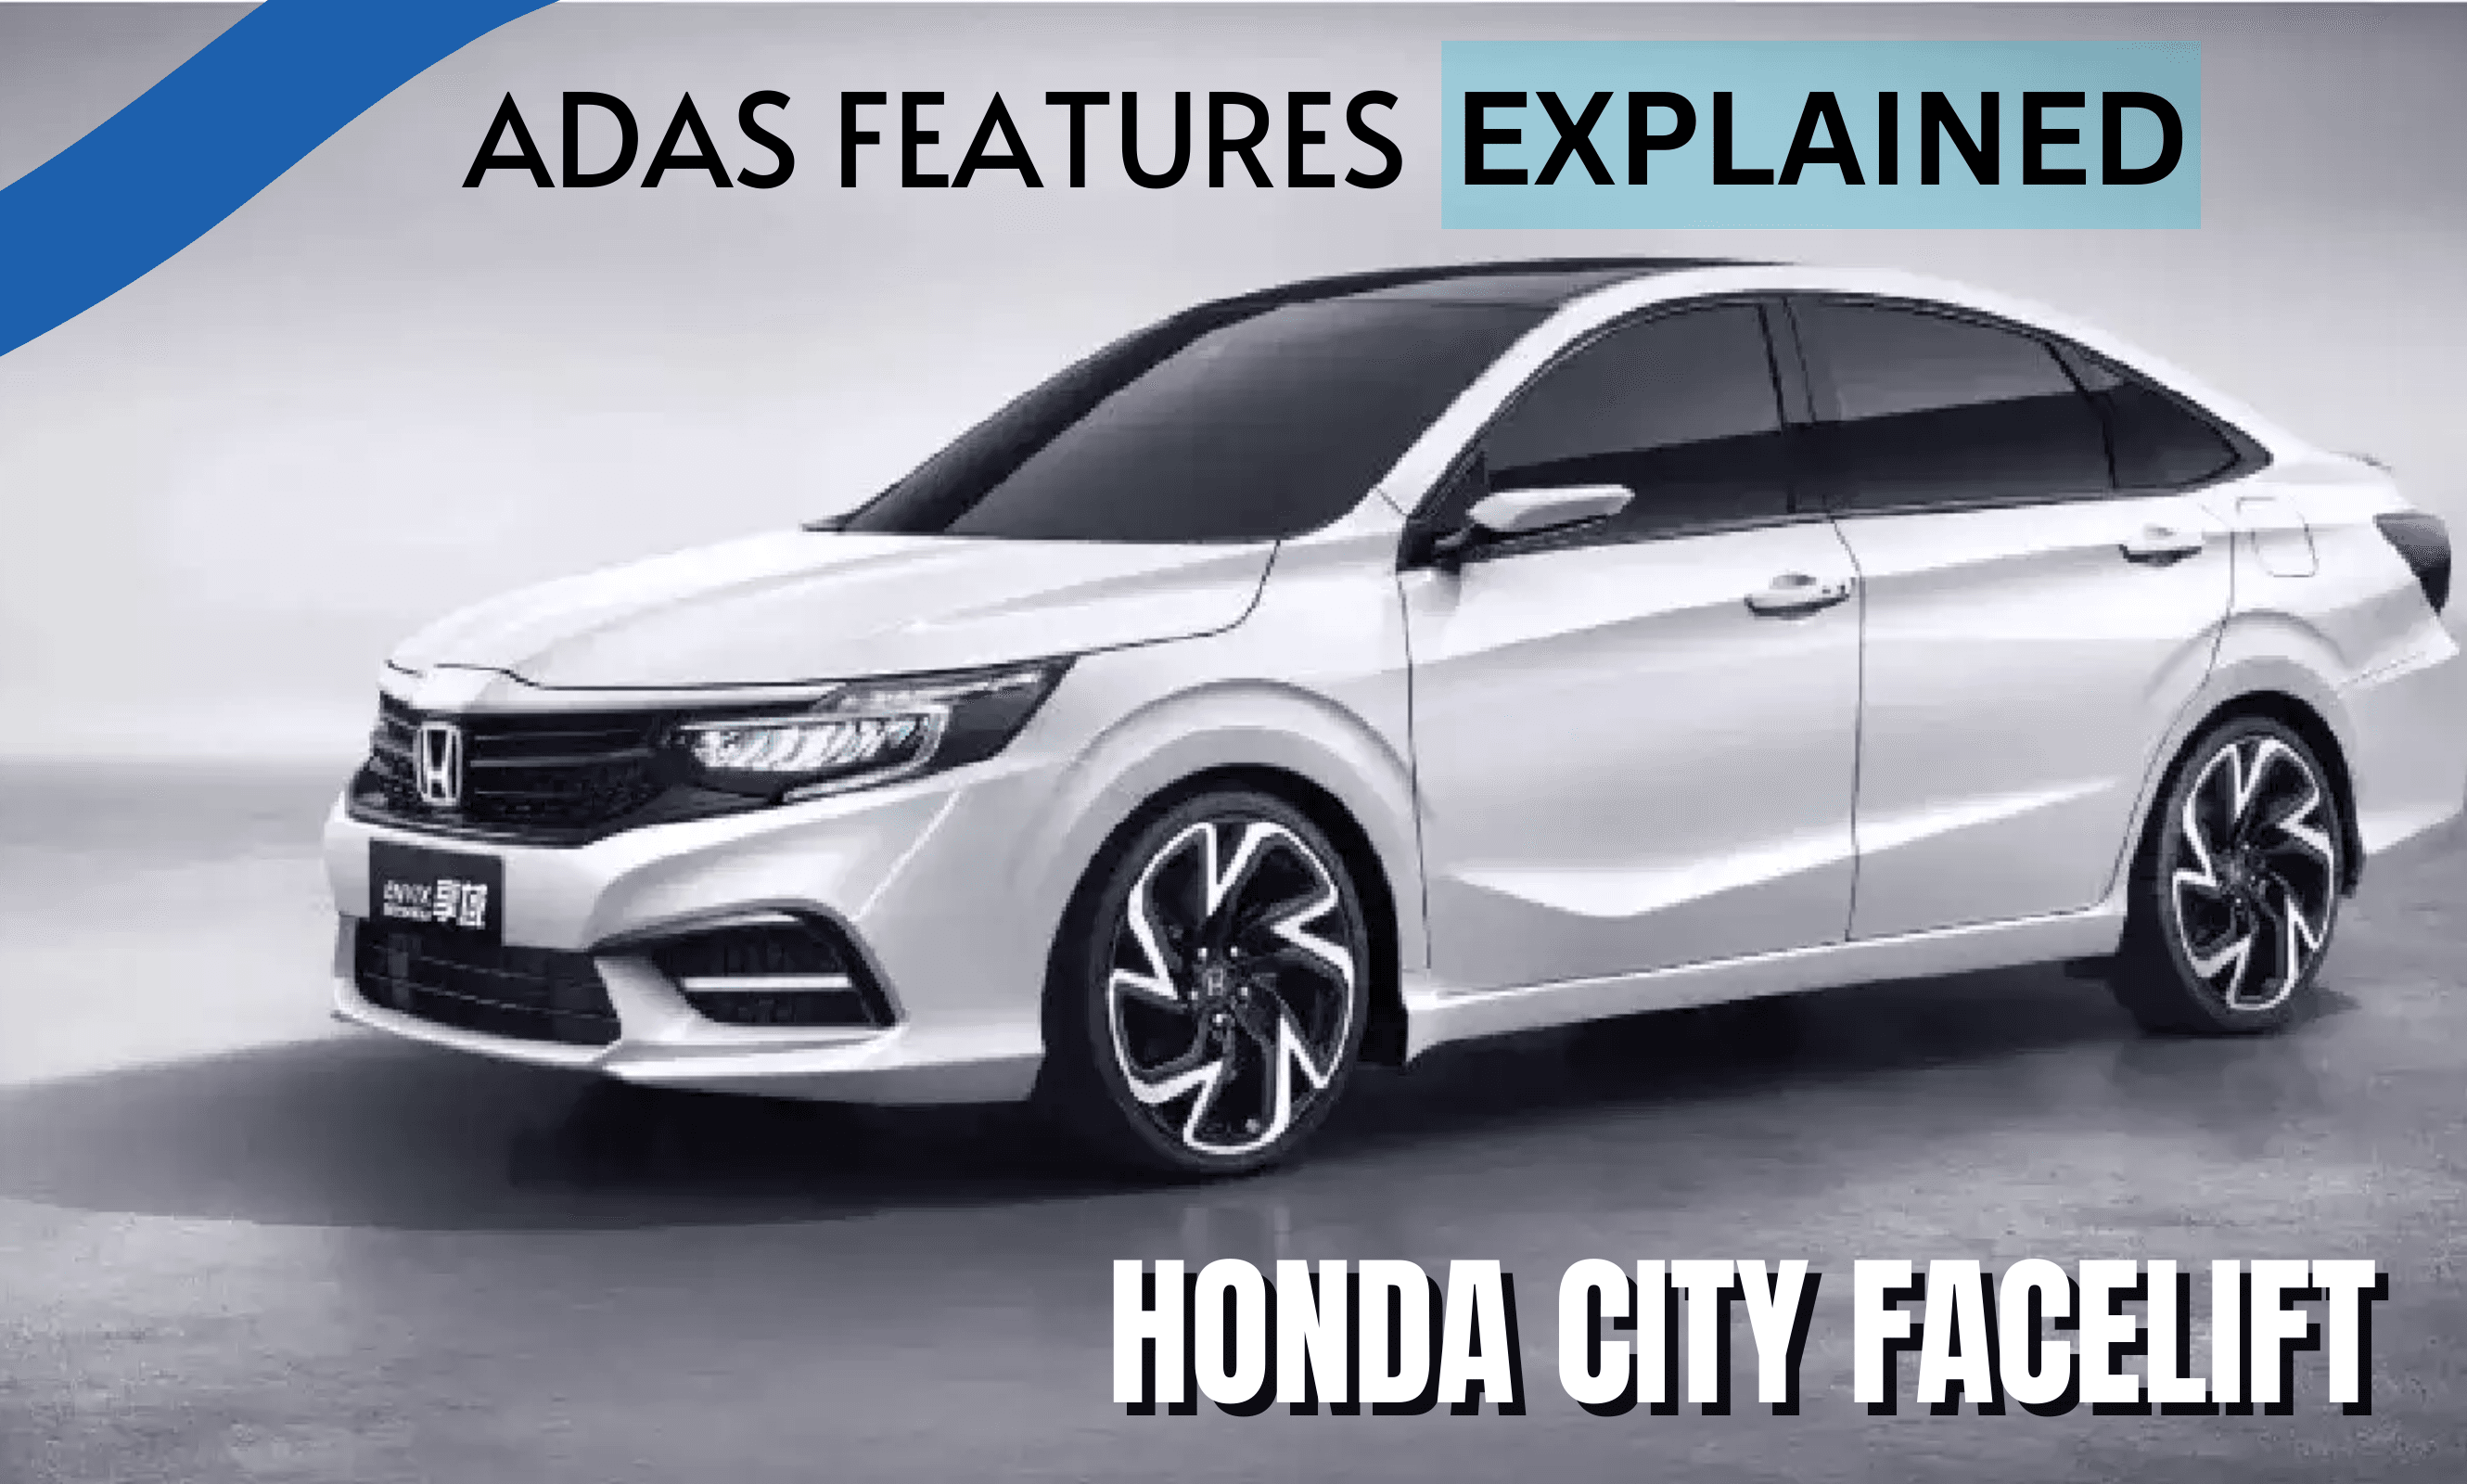 Honda City Facelift ADAS Features Explained 